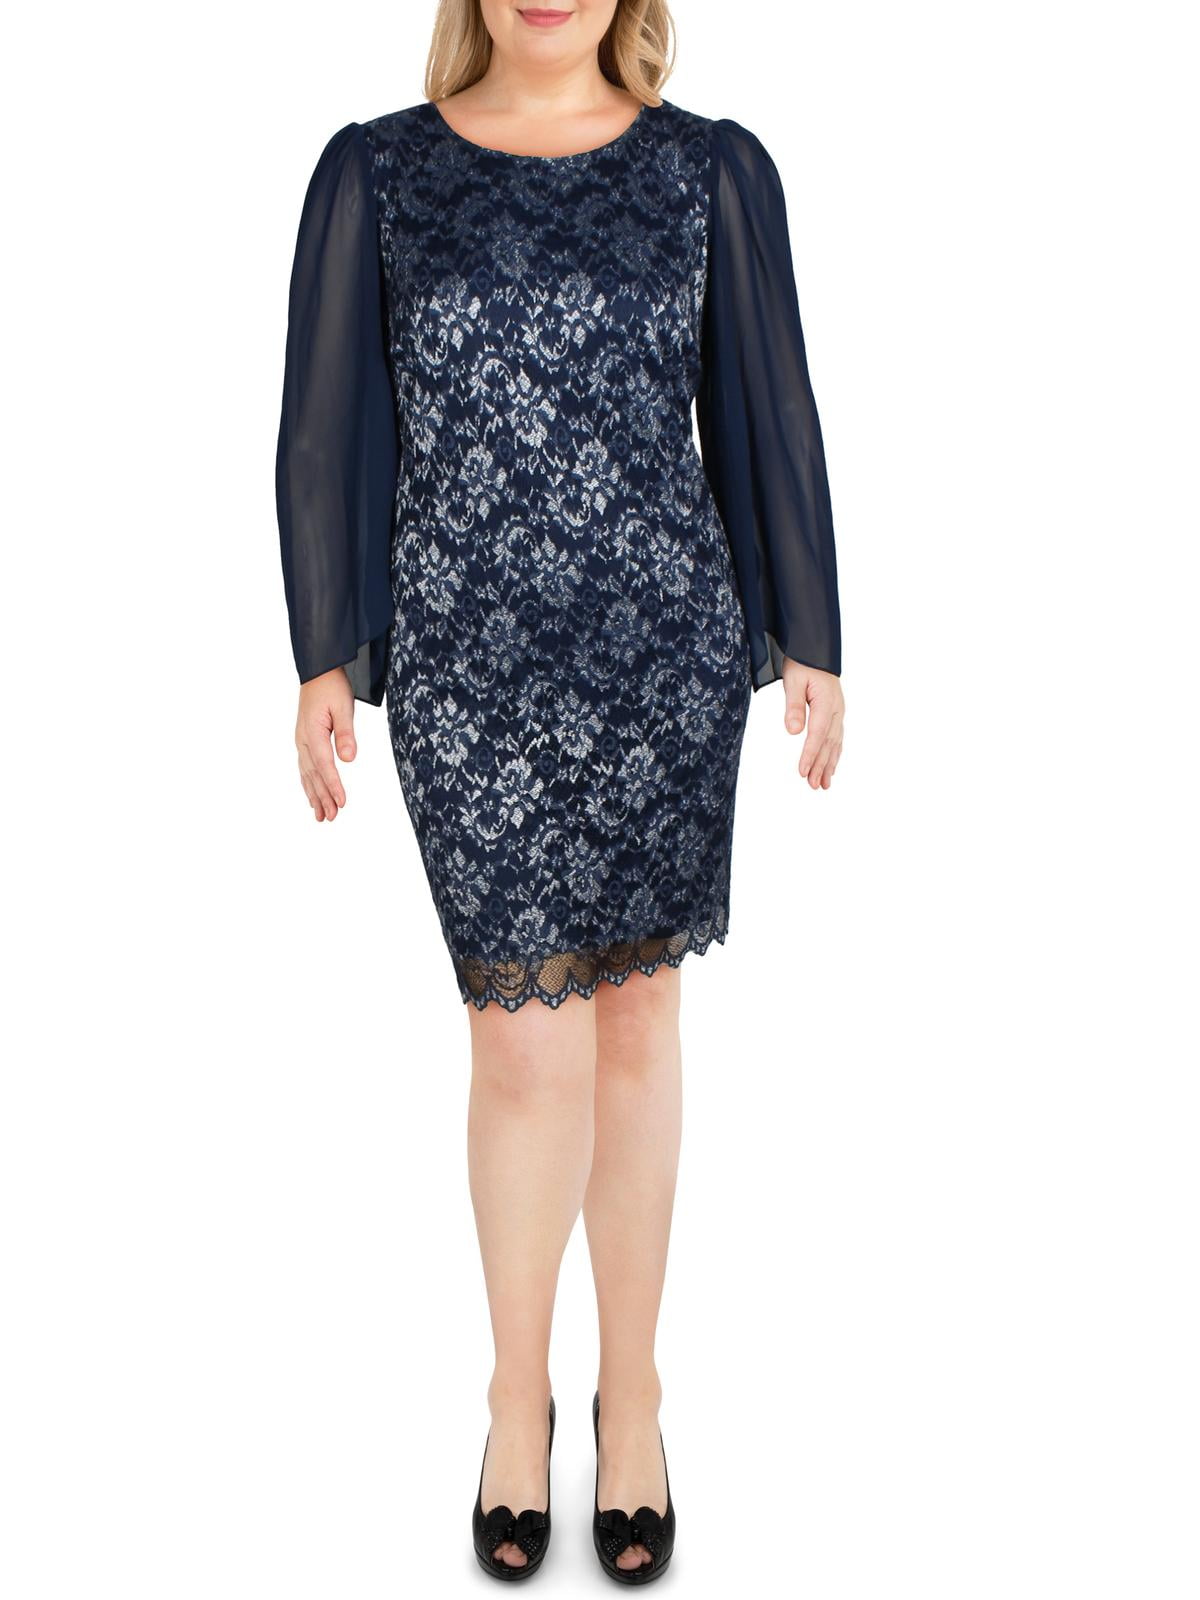 Connected Apparel Womens Plus-Size Cap-Sleeve Sequin-Lace Dress